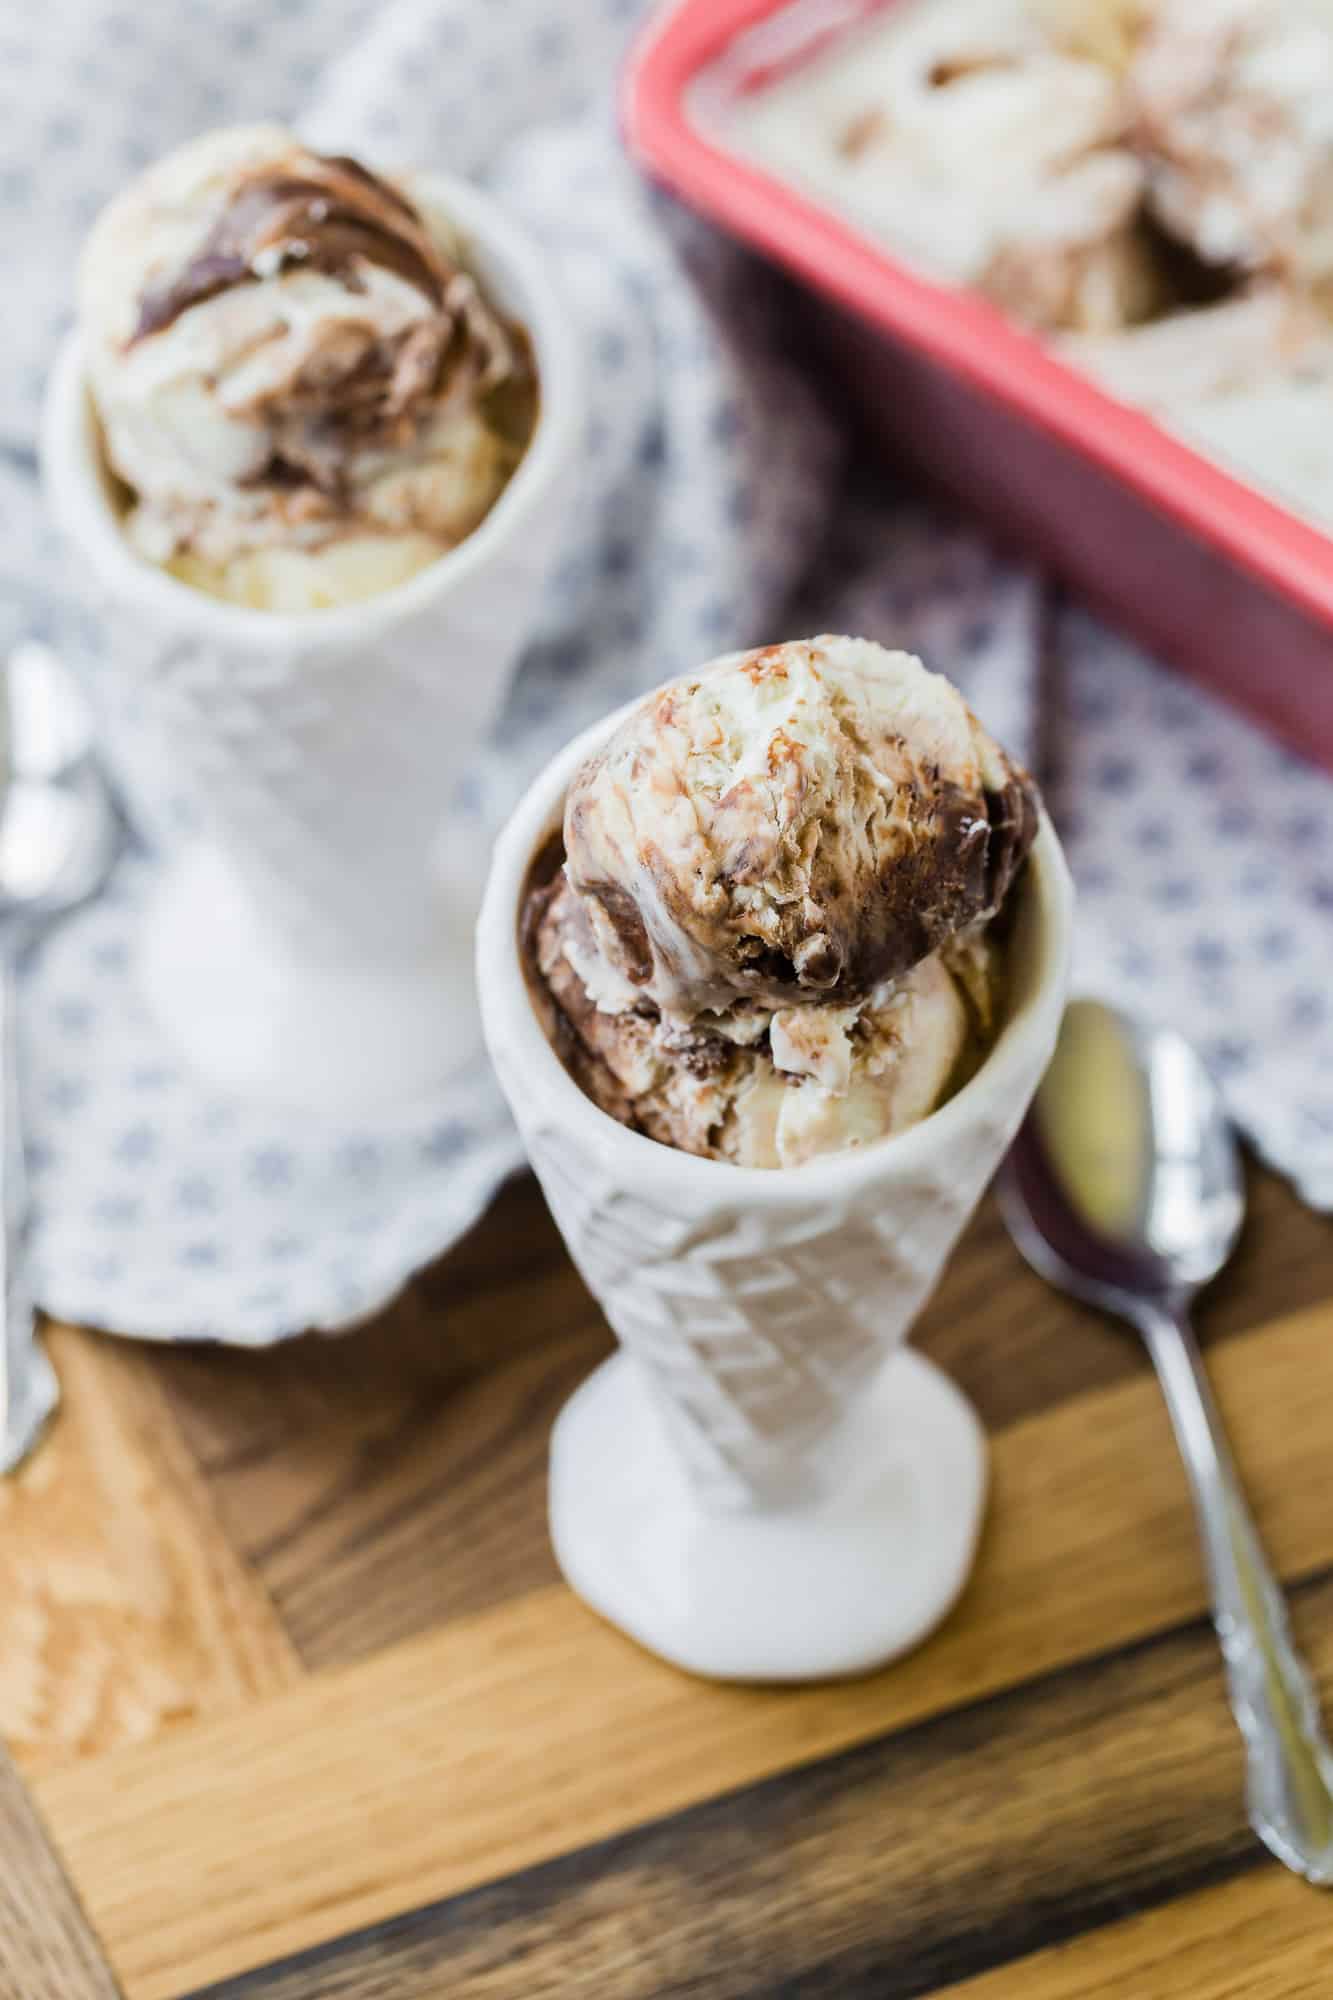 Ice cream in a white cone shaped bowl.